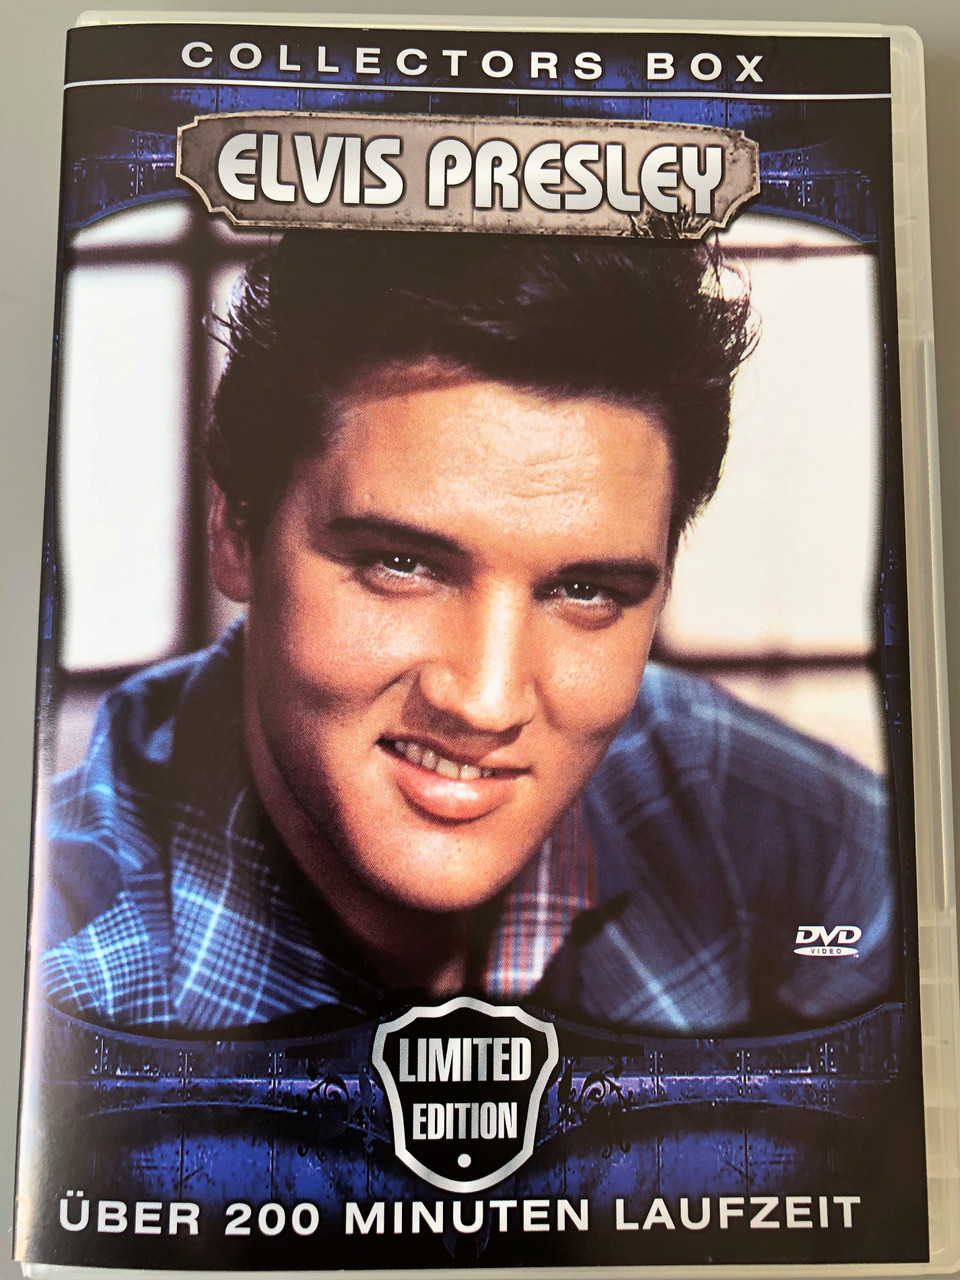 Elvis Presley Limited Edition Collectors Box DVD 2011 / Over 200 minutes  runtime / Elvis Back to the fifties, Biography, Slideshow / Scotty Moore,  N. J. Fontana, Bill Black / Bonus: London Rock'n Roll Show '73 -  bibleinmylanguage